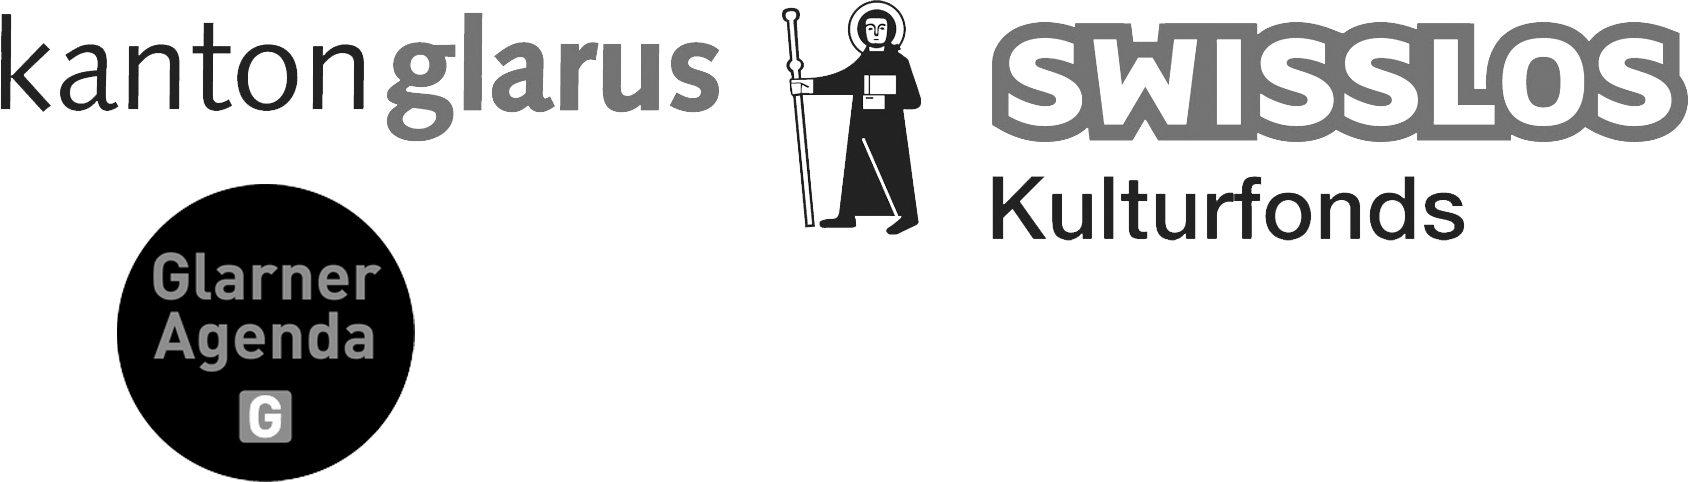 GL Logo Kulturfonds GL Swisslos